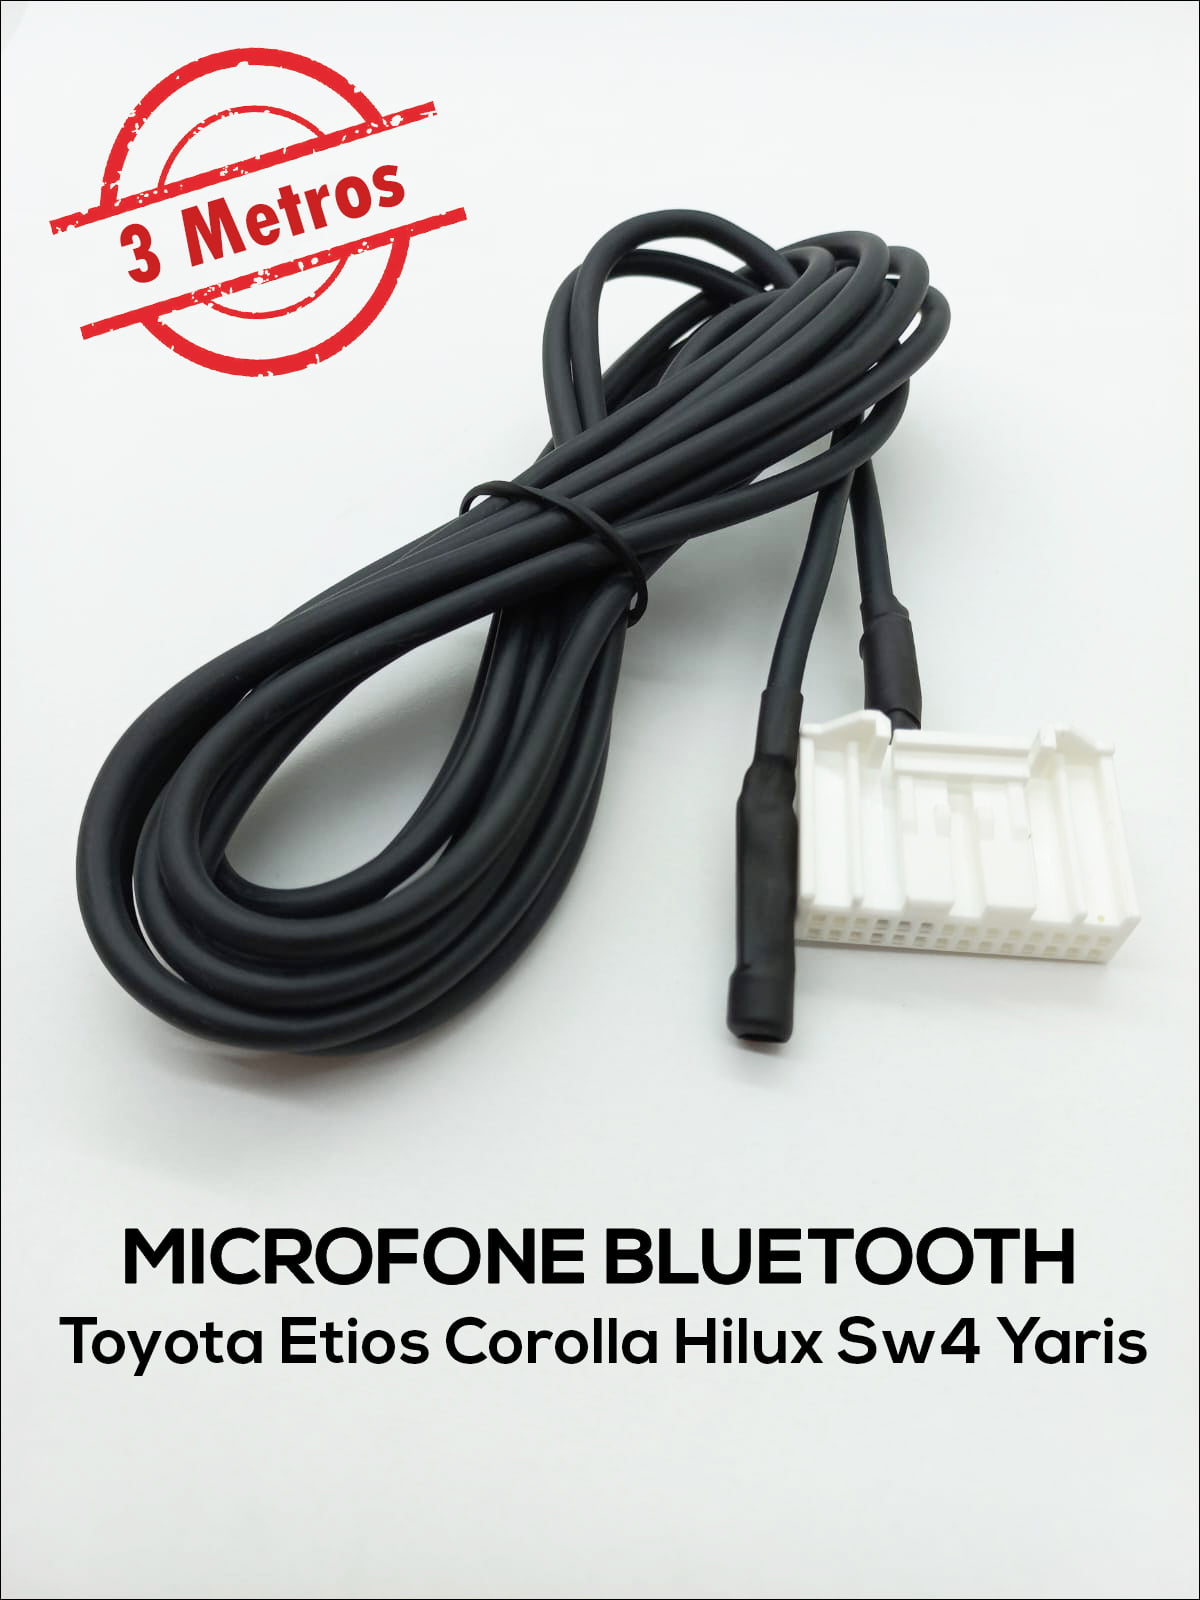 Microfone Bluetooth Toyota Etios Corolla Hilux Sw4 Yaris